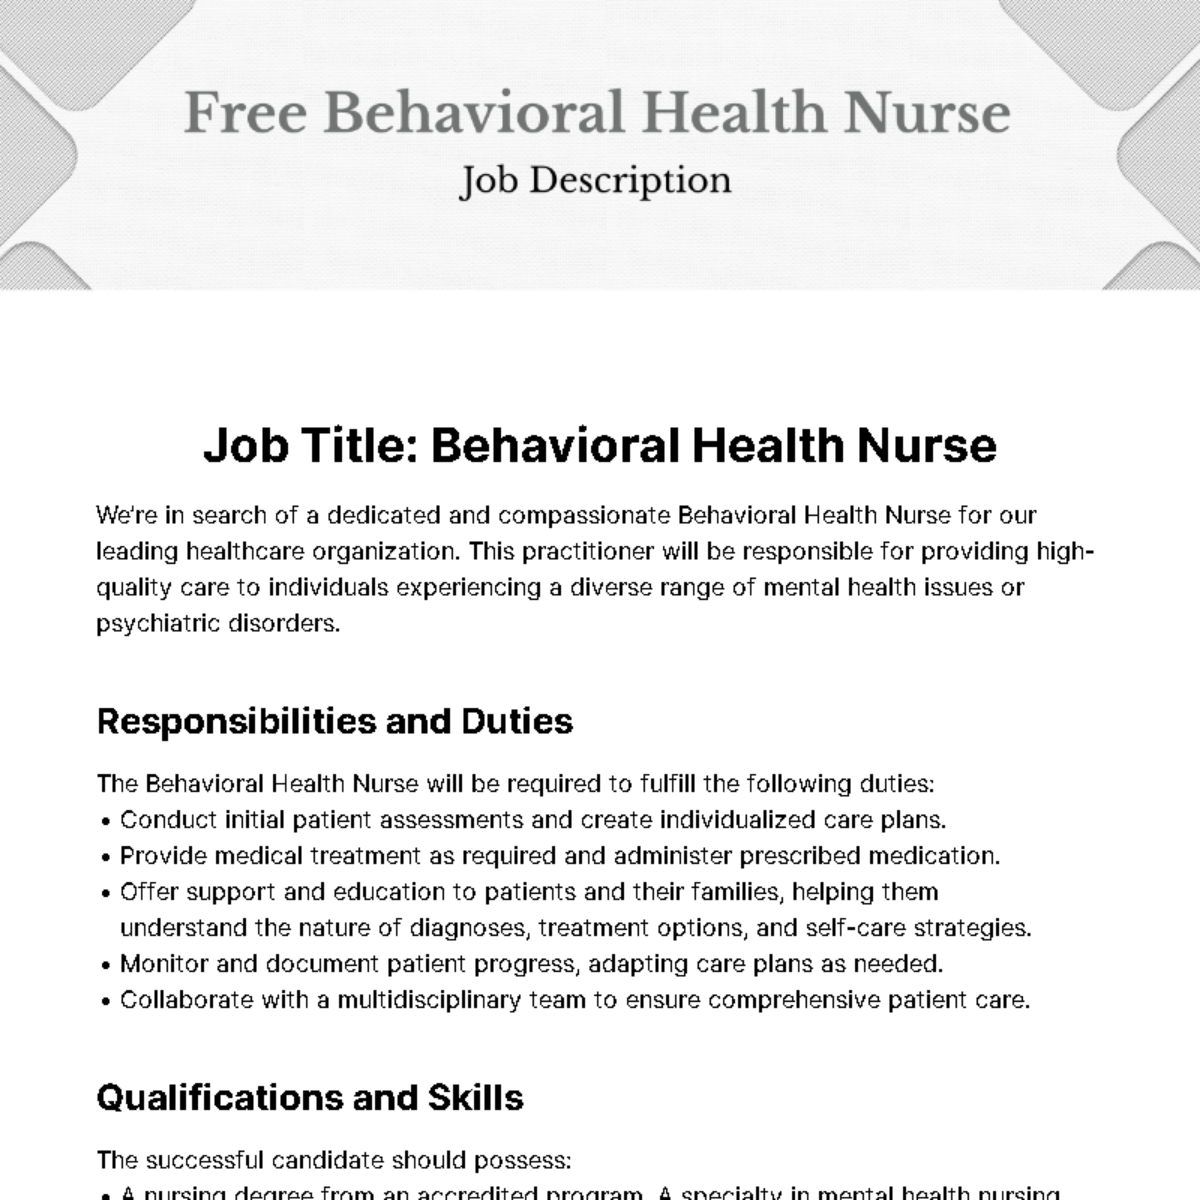 Free Behavioral Health Nurse Job Description Template